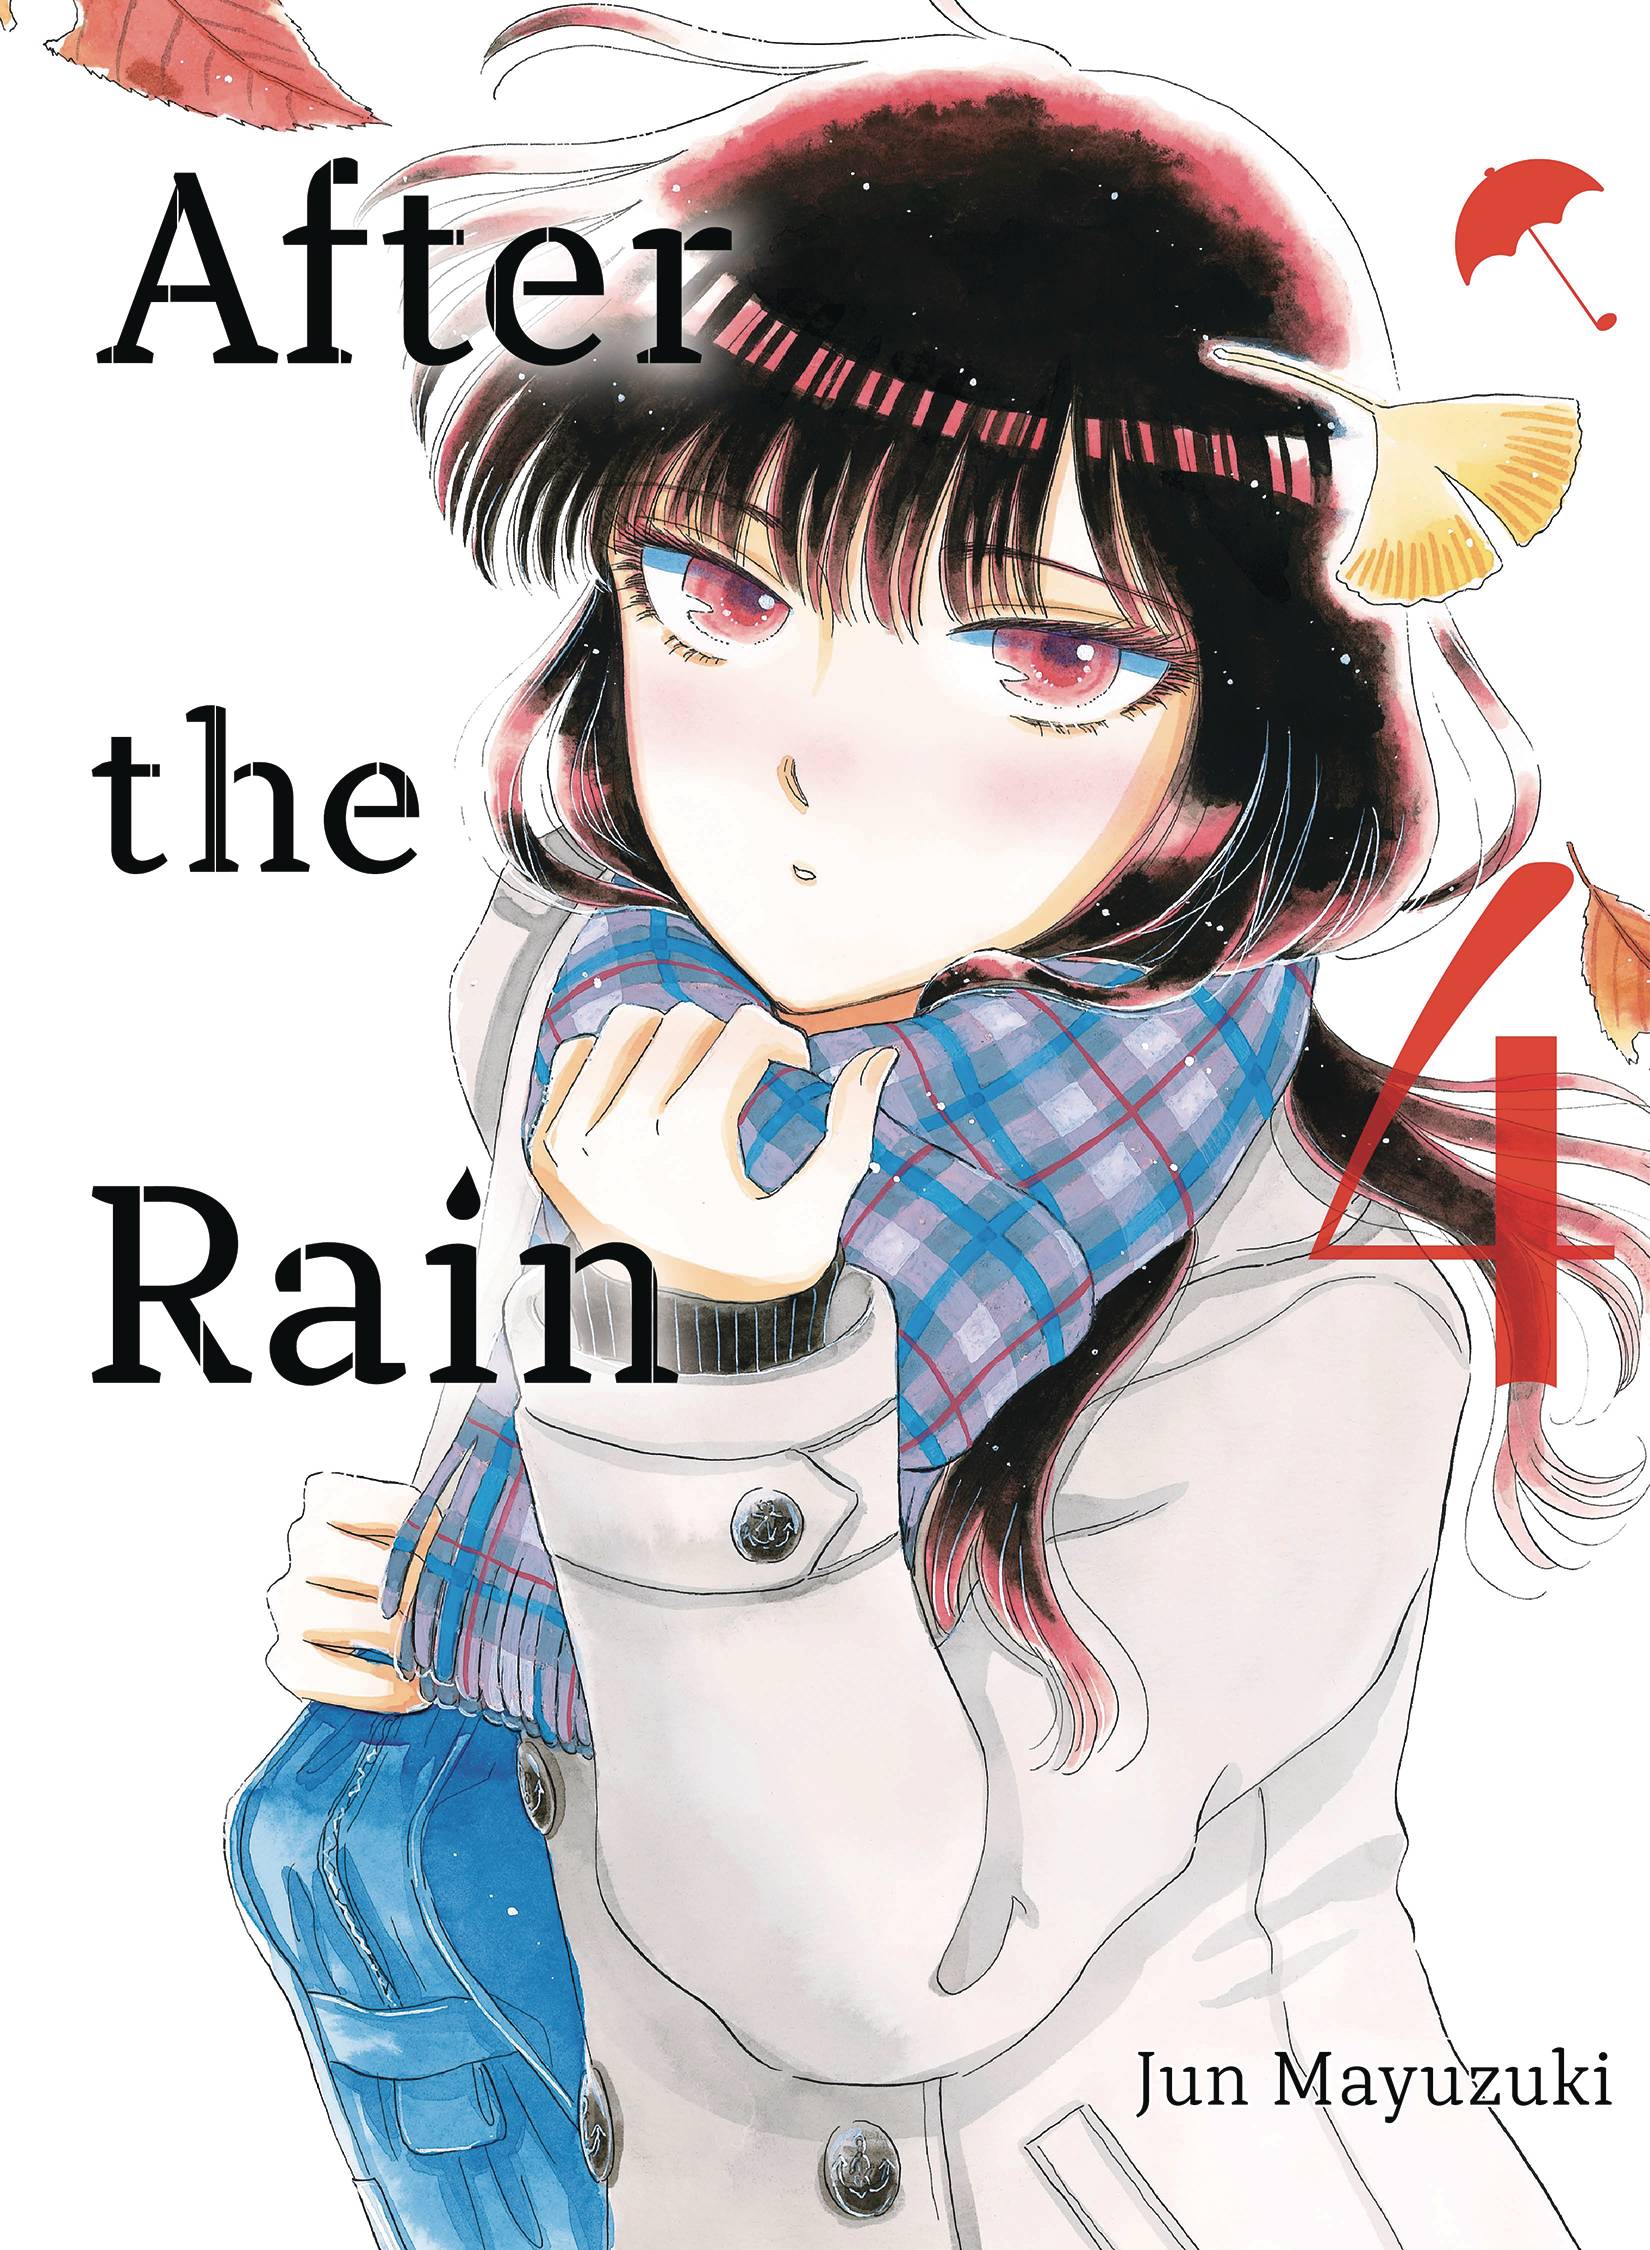 After Rain Manga Volume 4